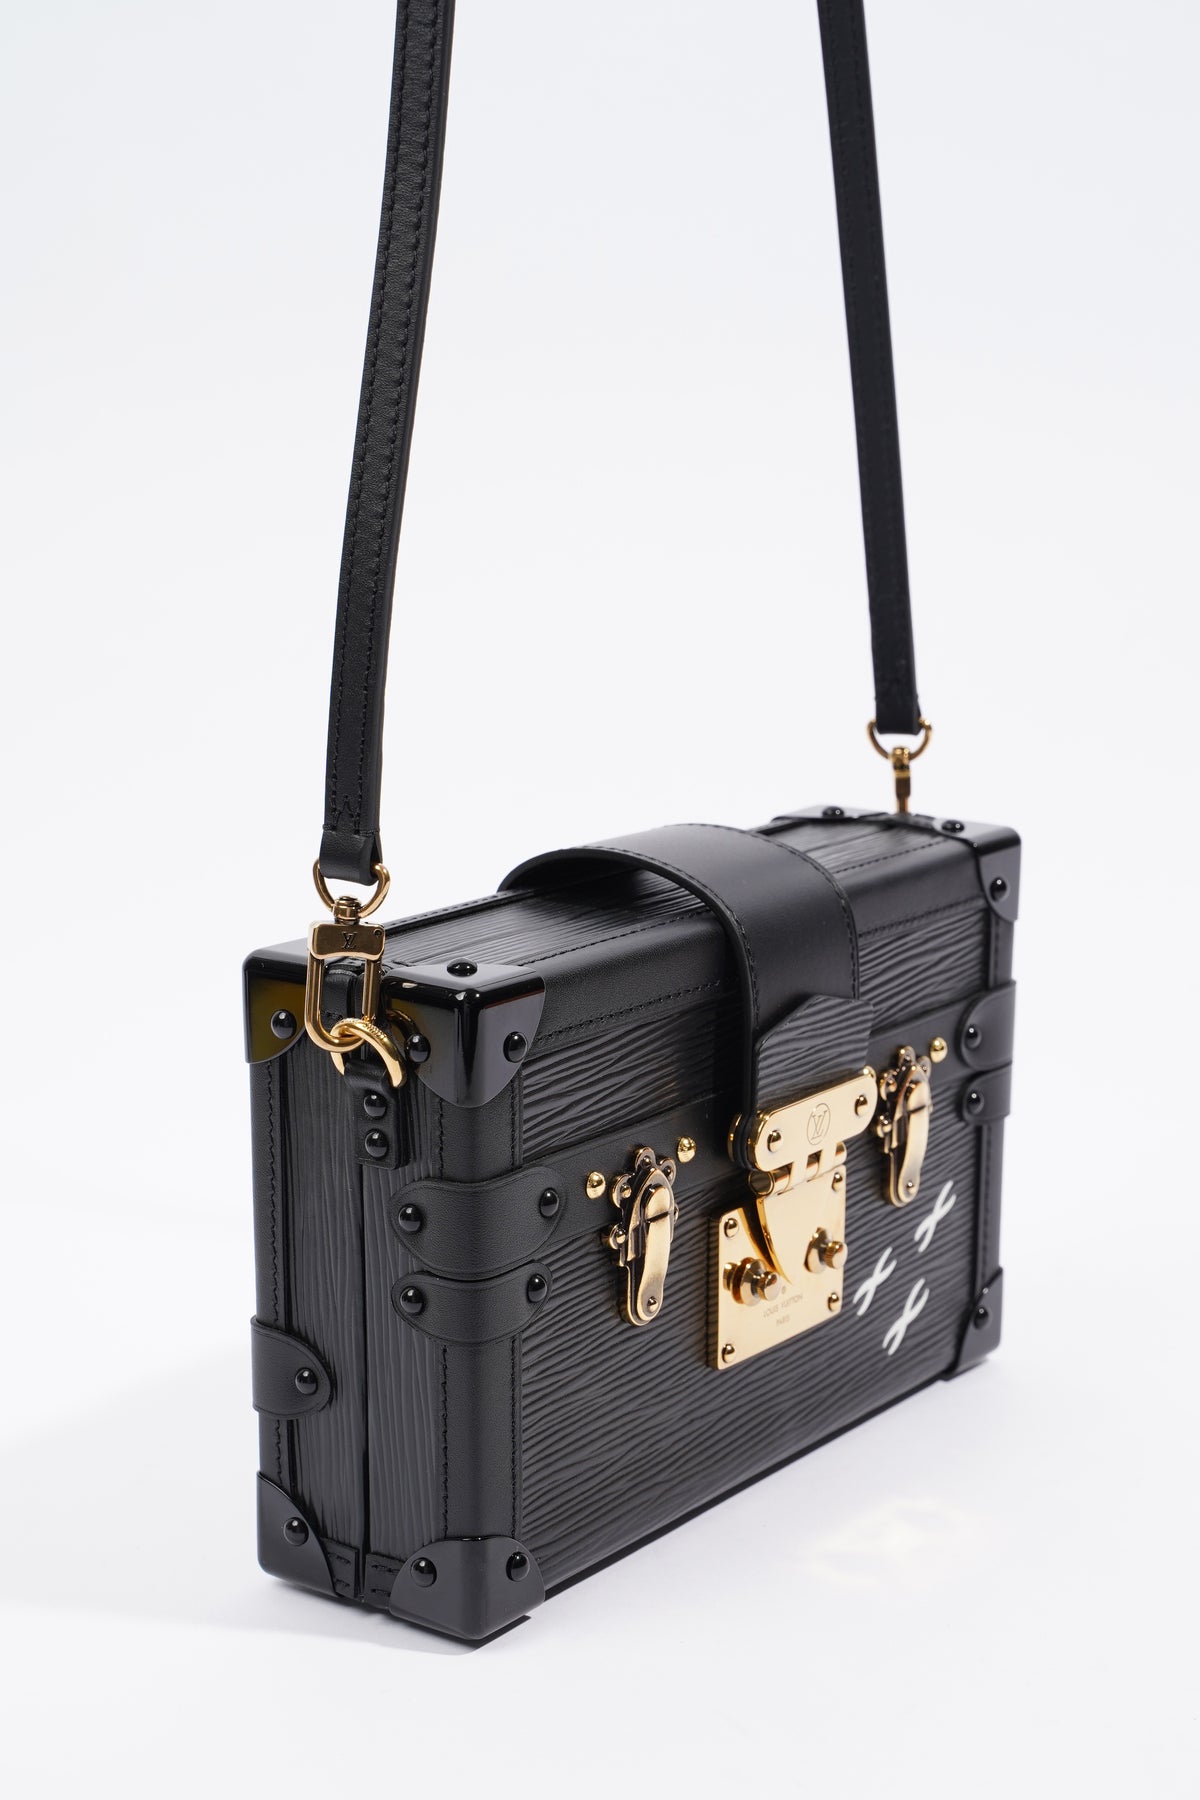 Louis Vuitton Black Epi Leather Petite Malle Bag Louis Vuitton